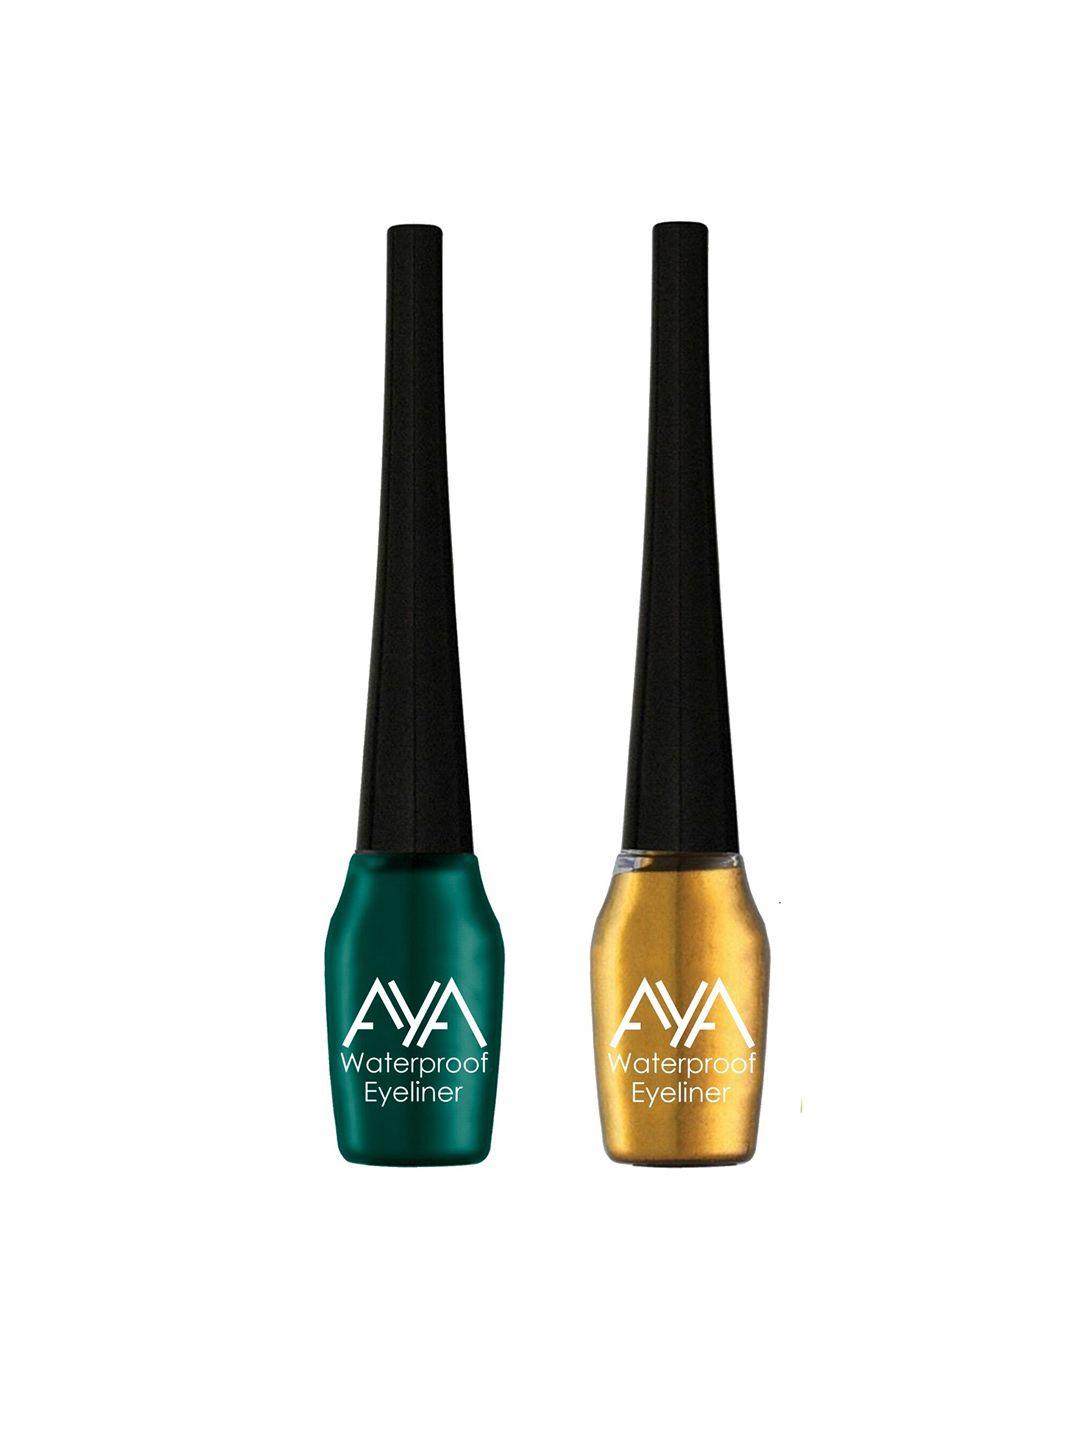 aya set of 2 waterproof eyeliner - green & golden - 5 ml each